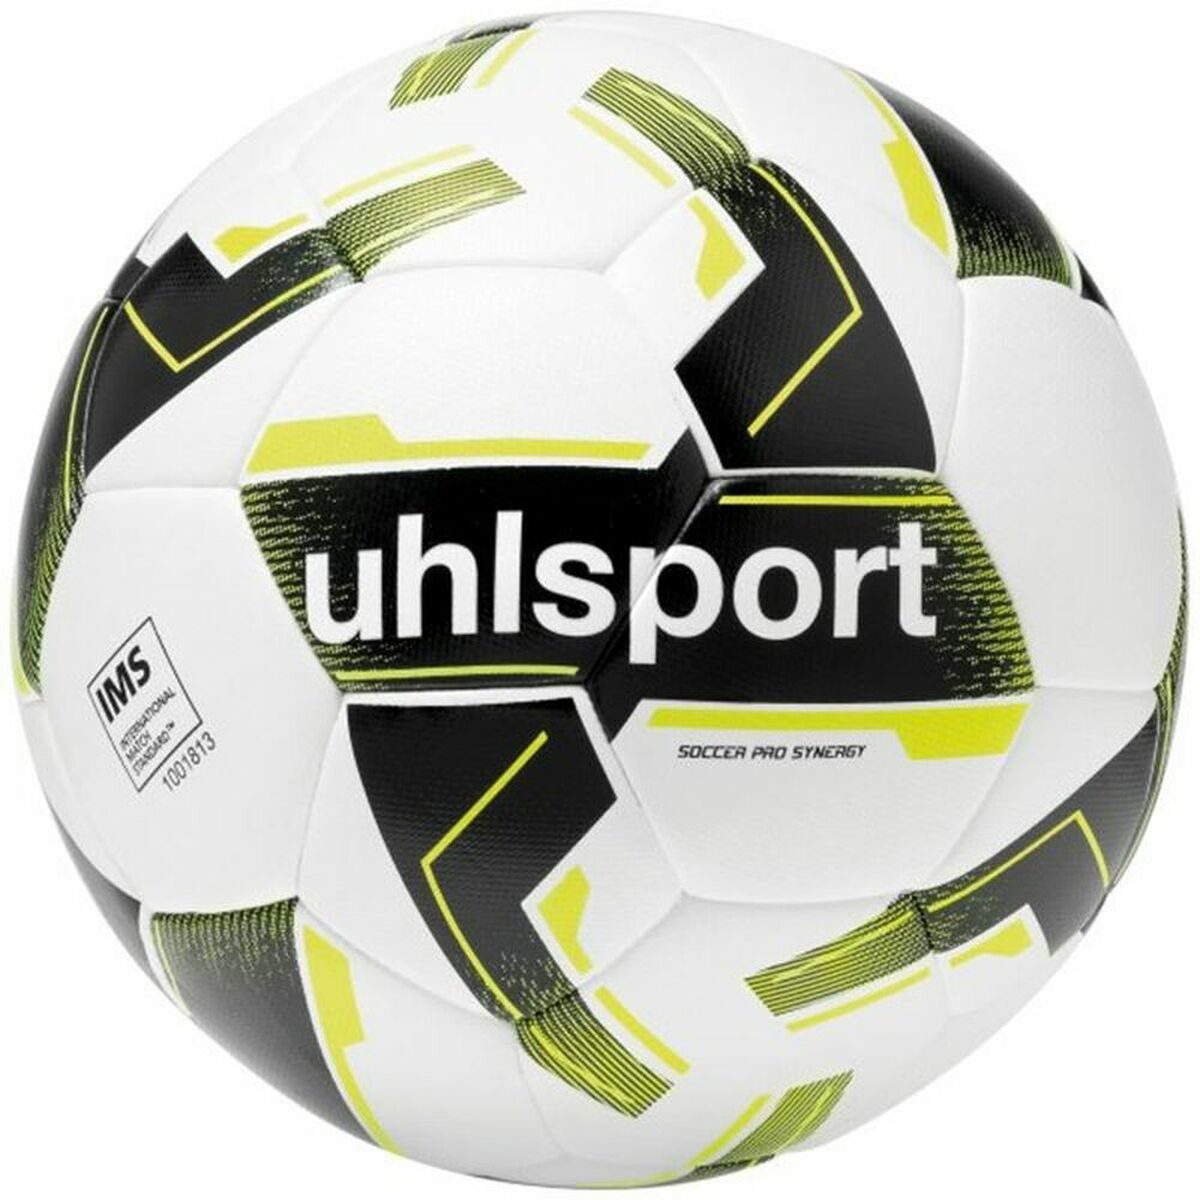 Ballon de Football Uhlsport  Synergy 5  Blanc